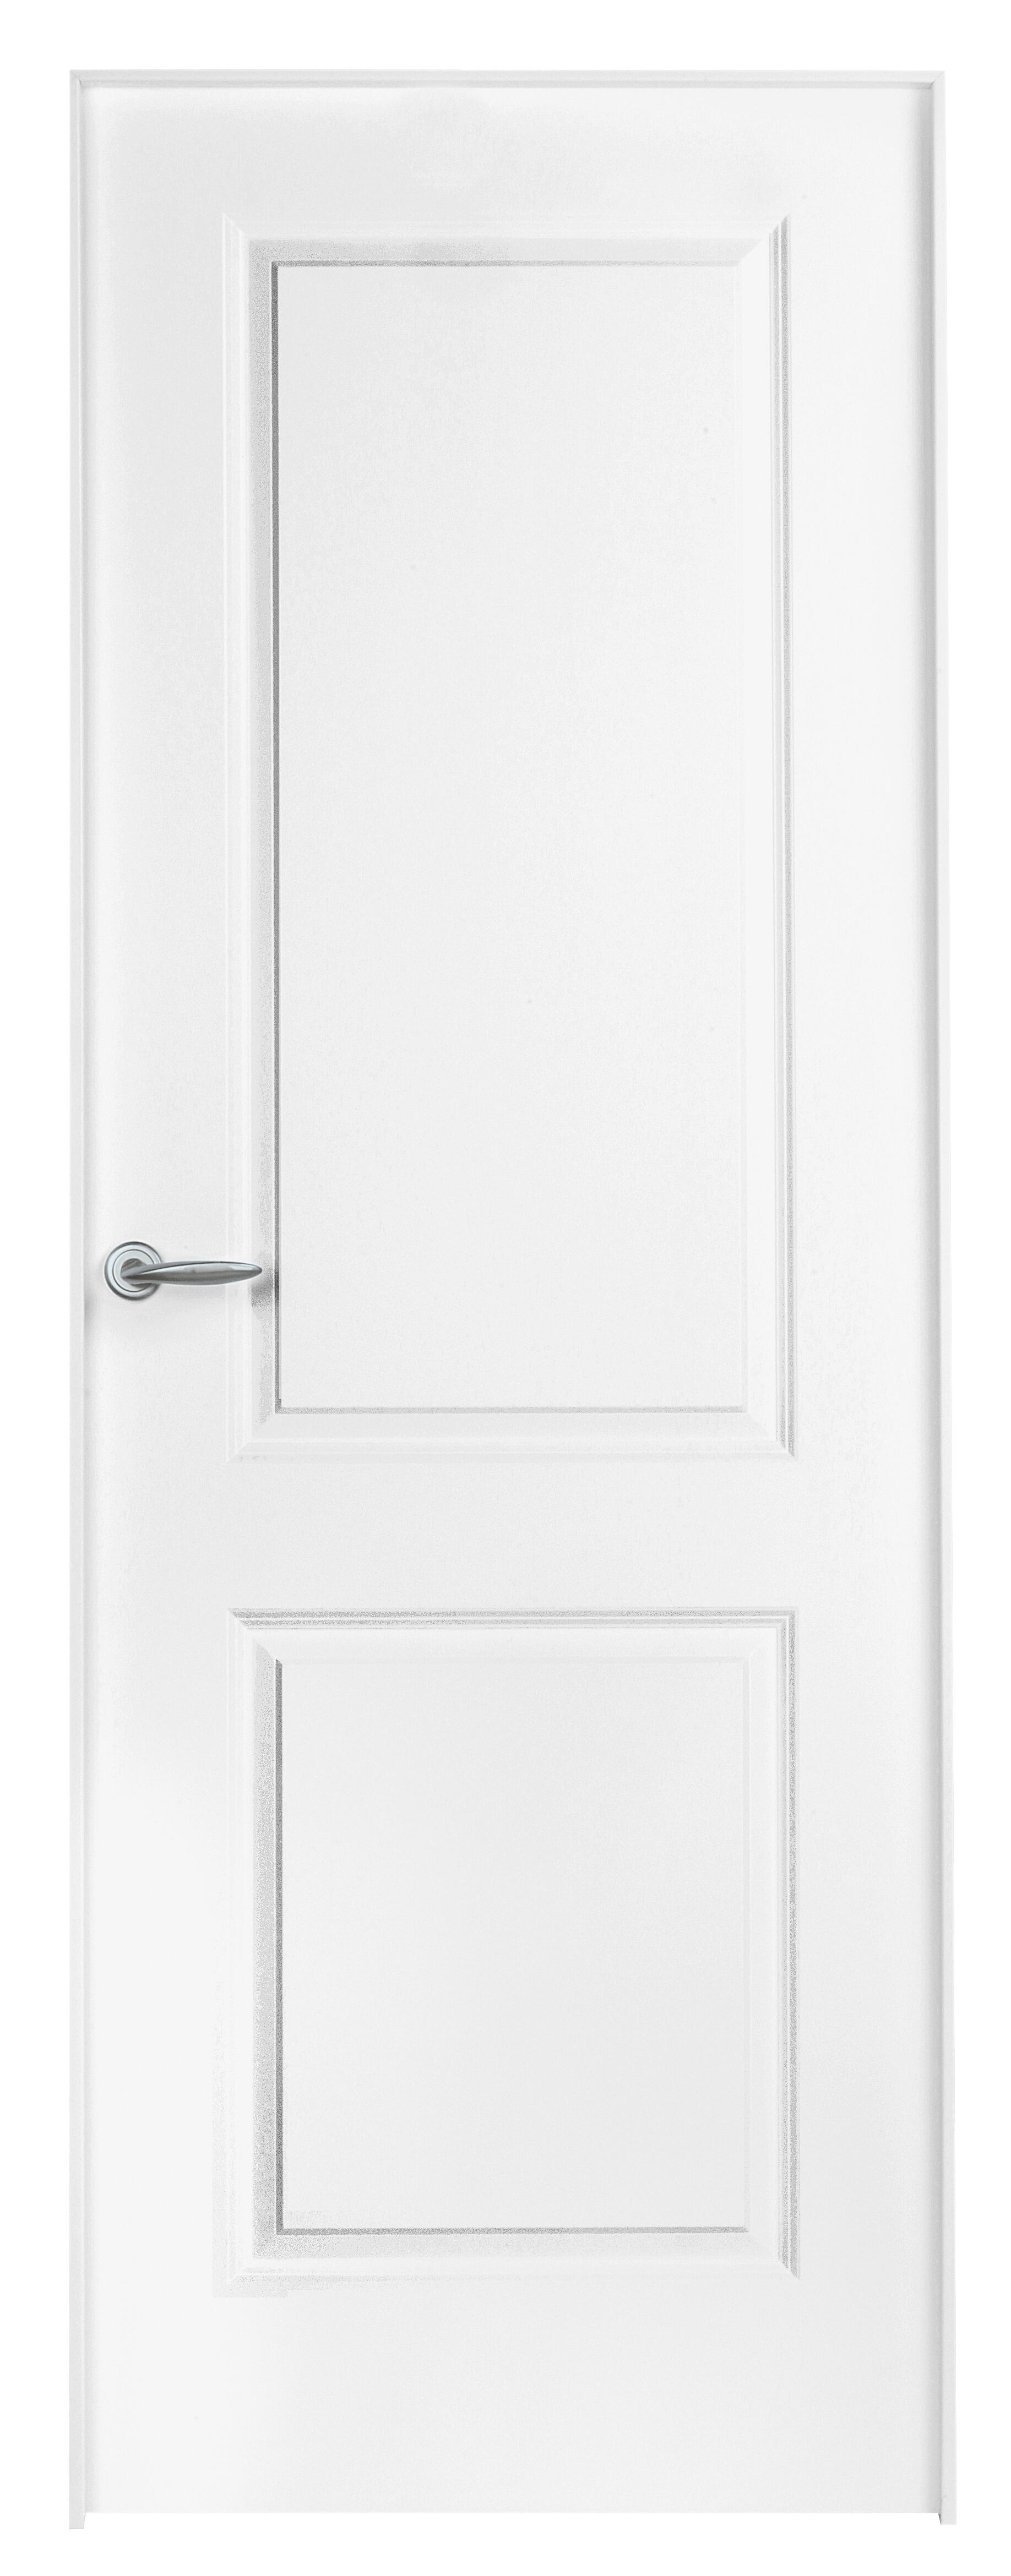 Puerta bonn blanco apertura derecha 82.5cm